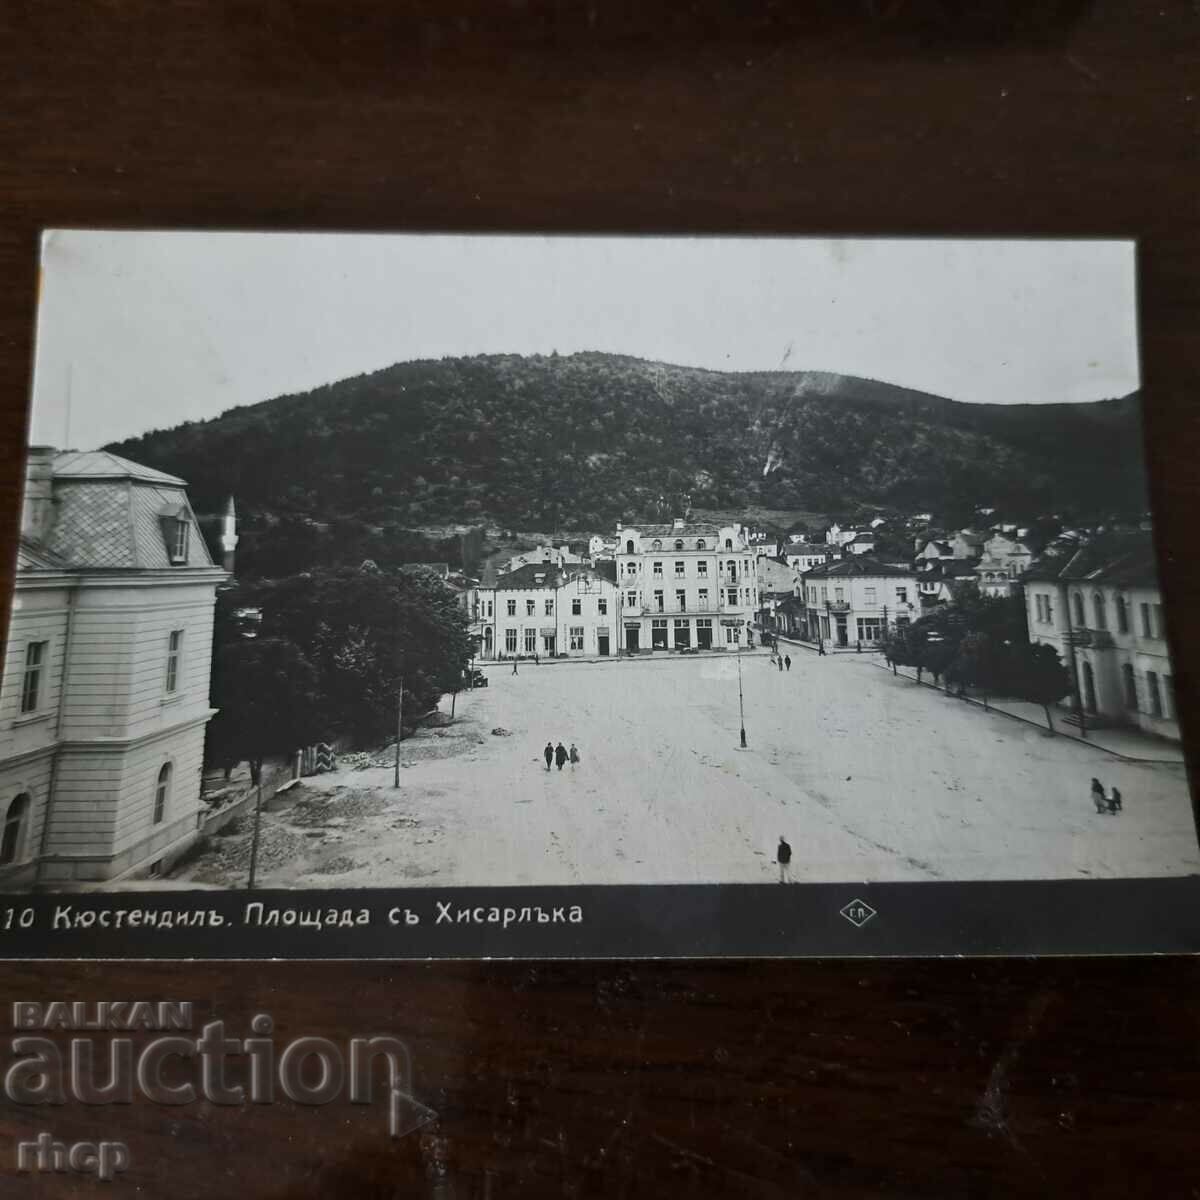 Piața Kyustendil și carte poștală veche Hisarlka din 1934